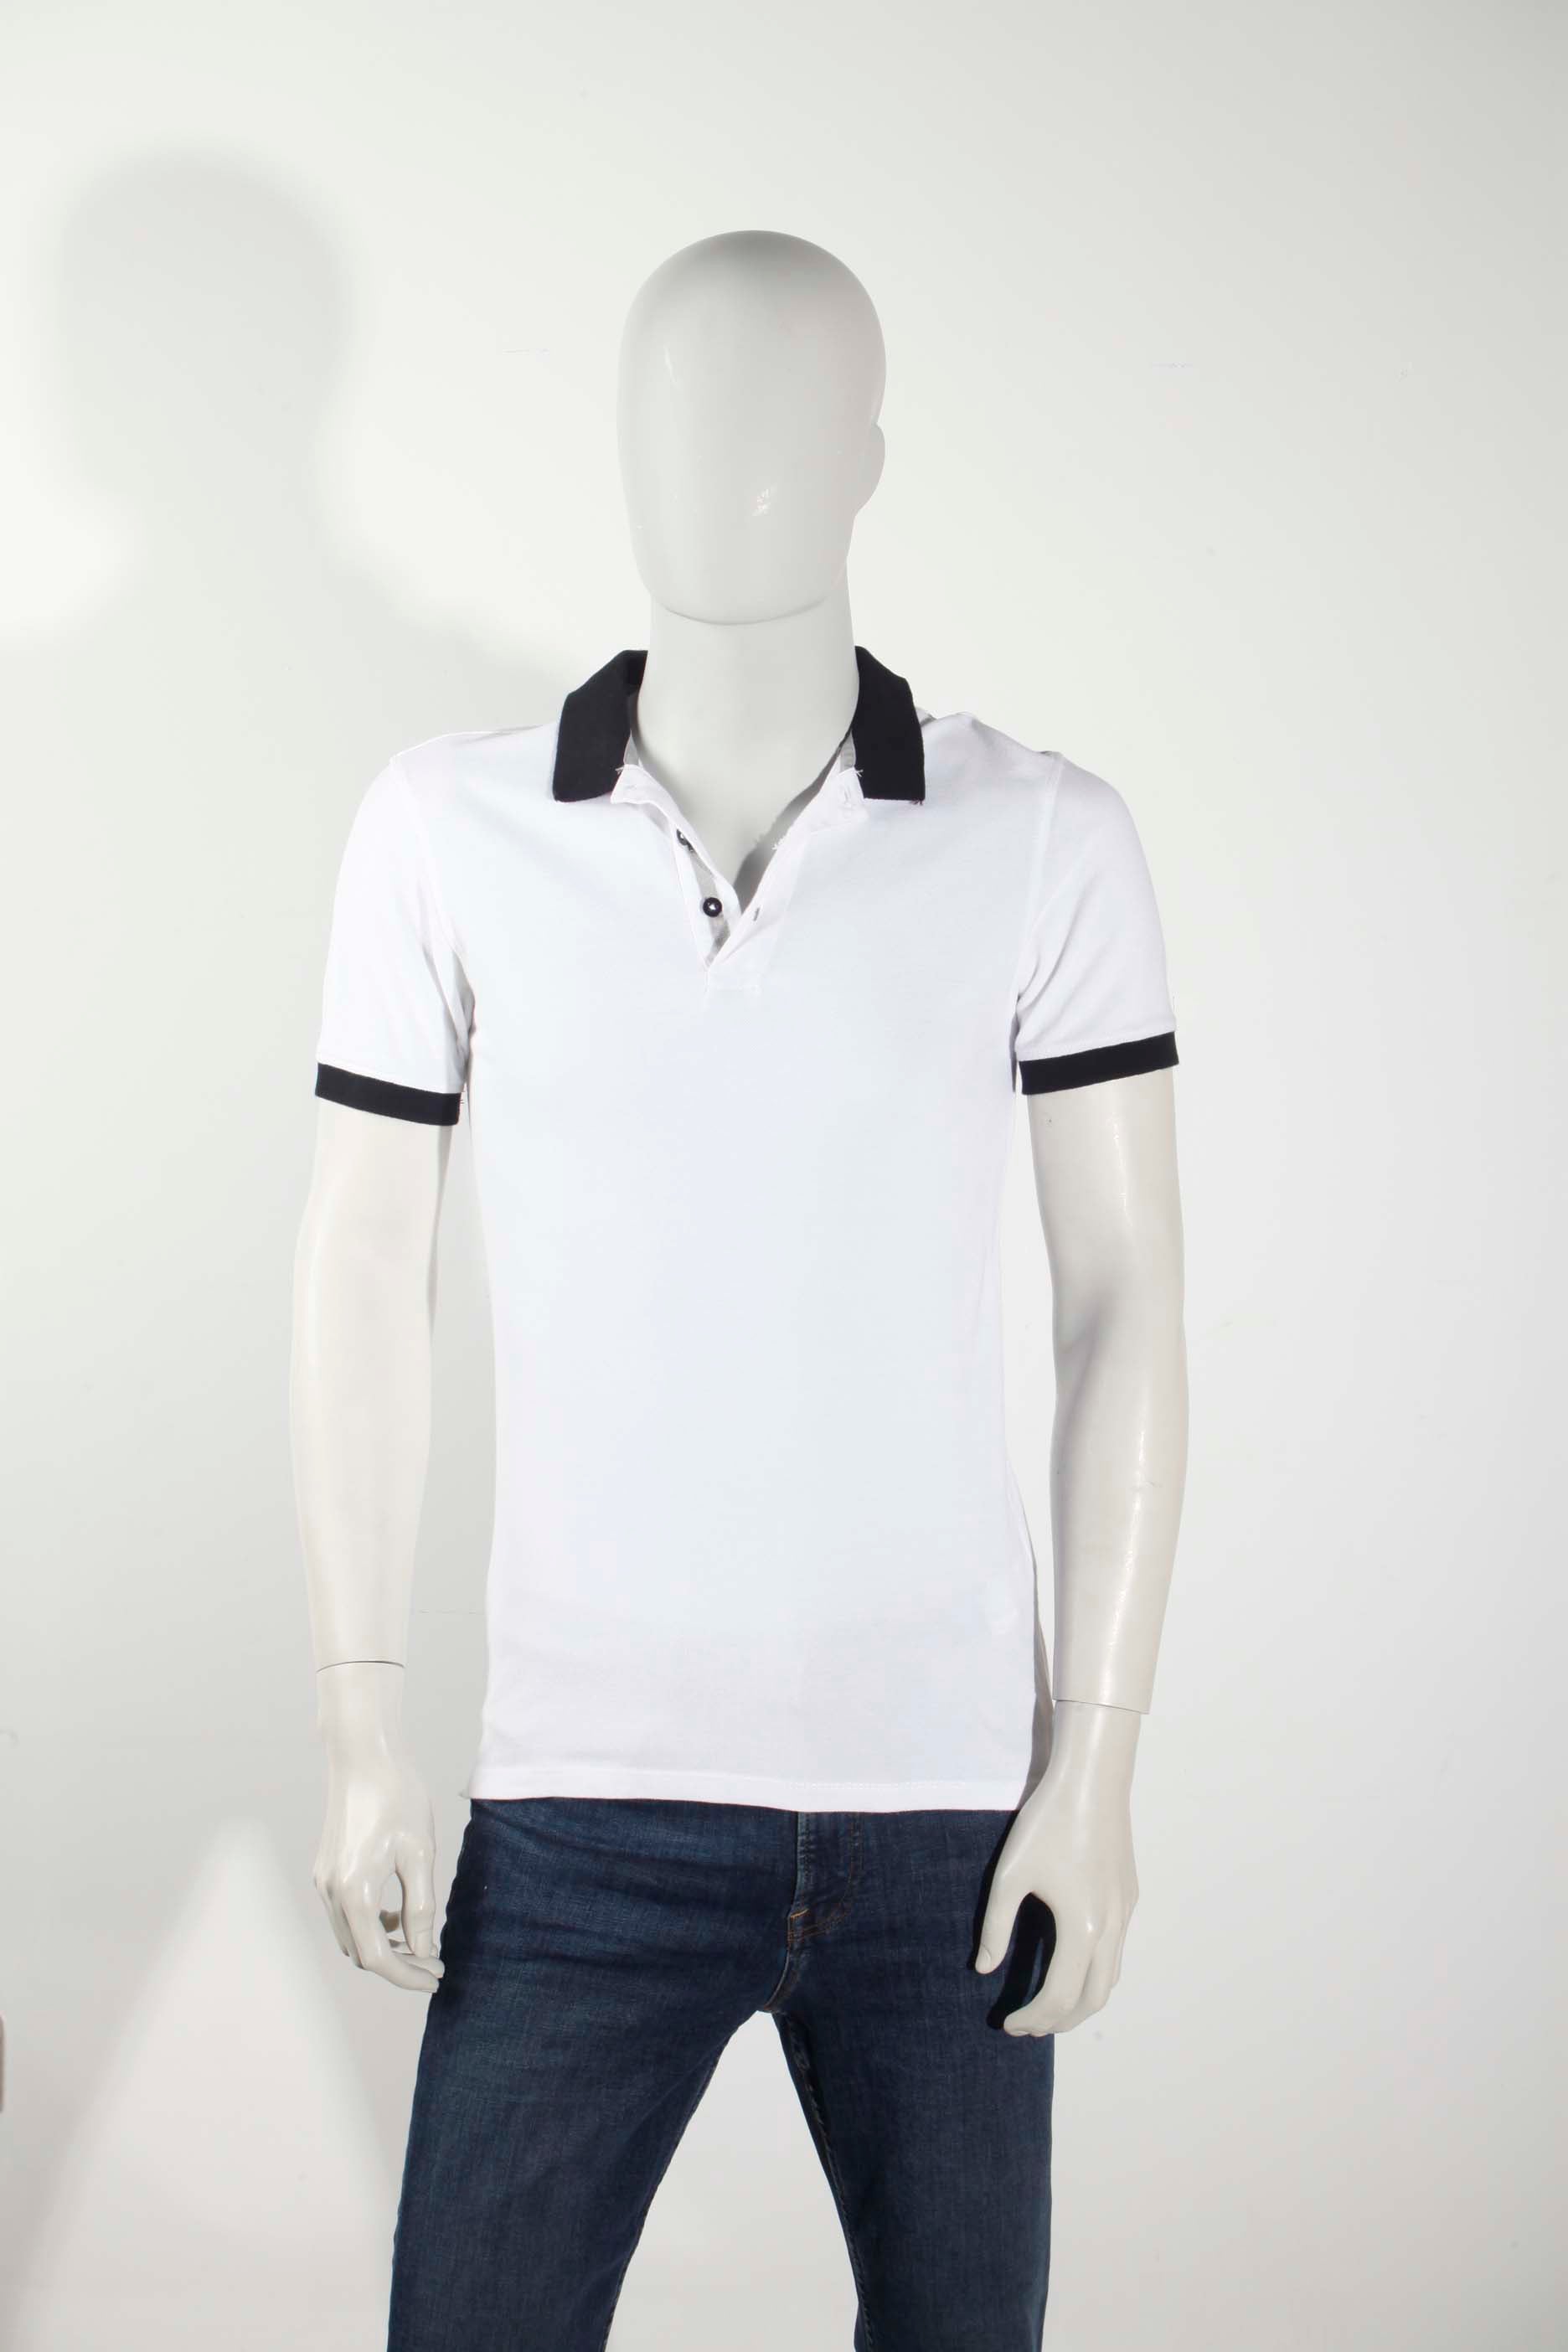 Mens White Polo Shirt with Black Collar